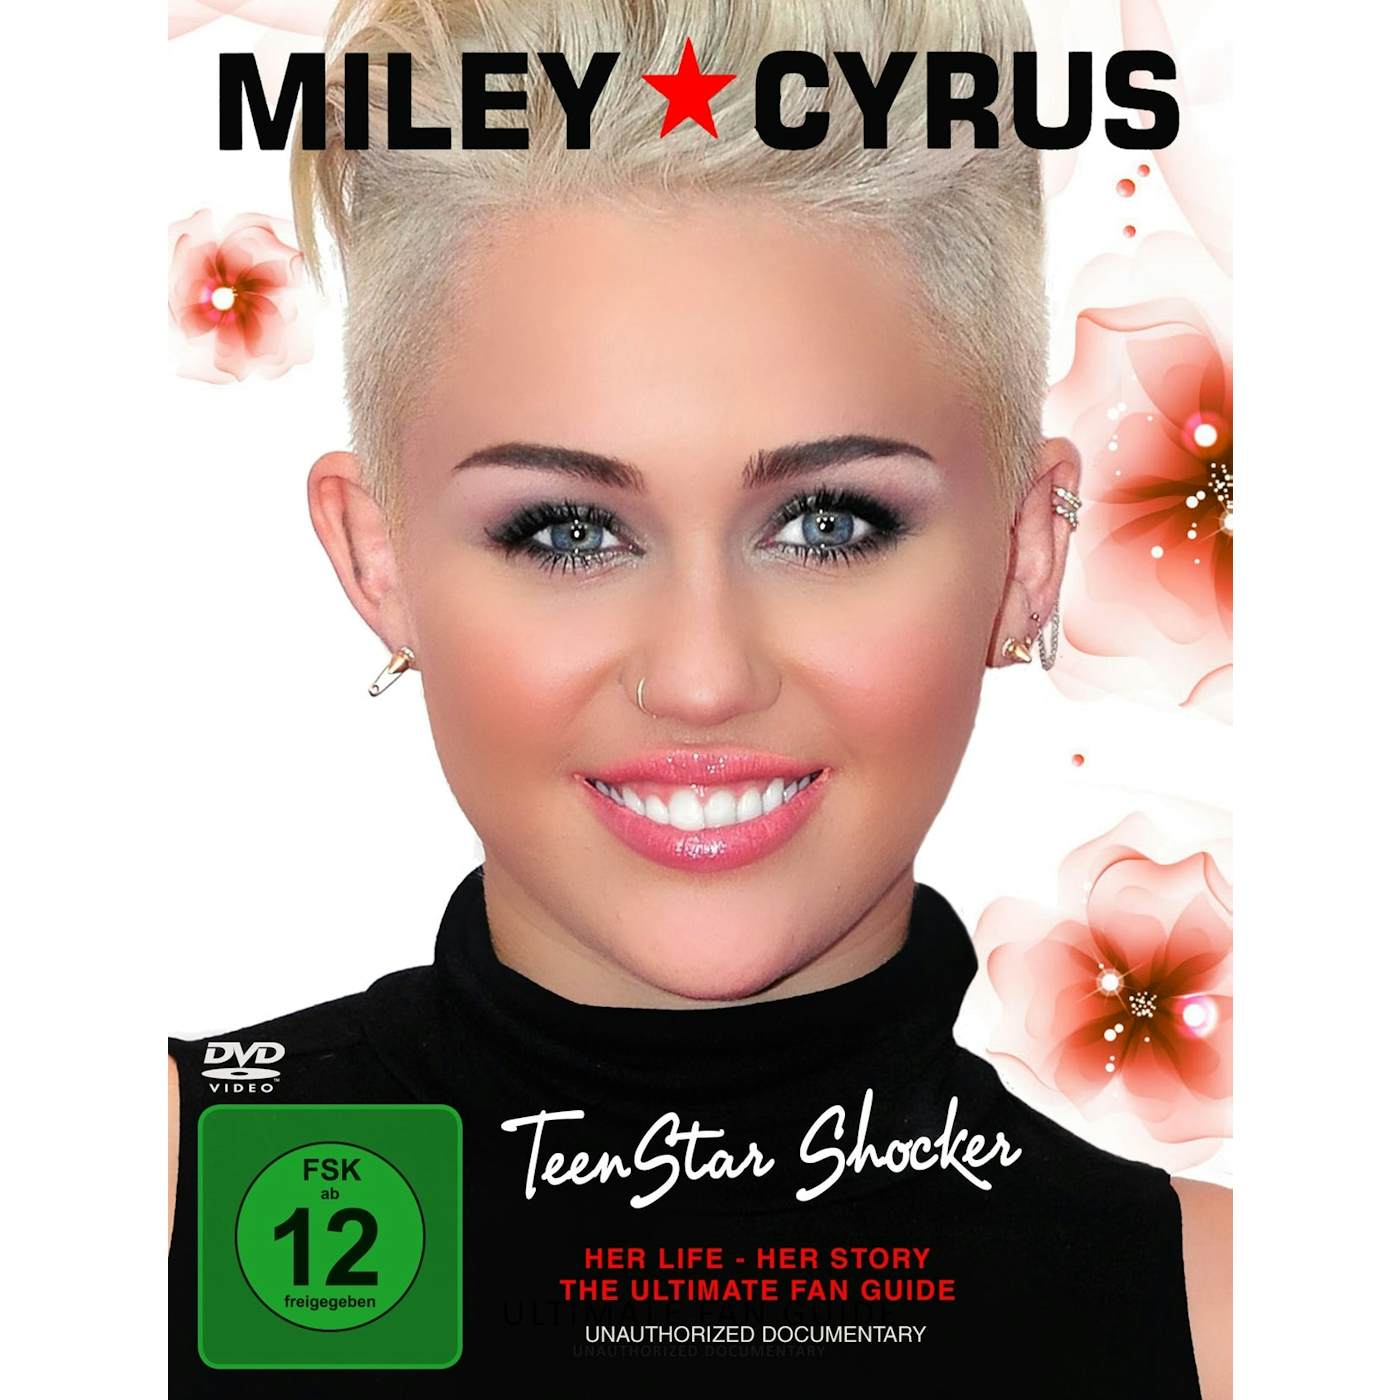 Miley Cyrus DVD - Teenstar Shocker